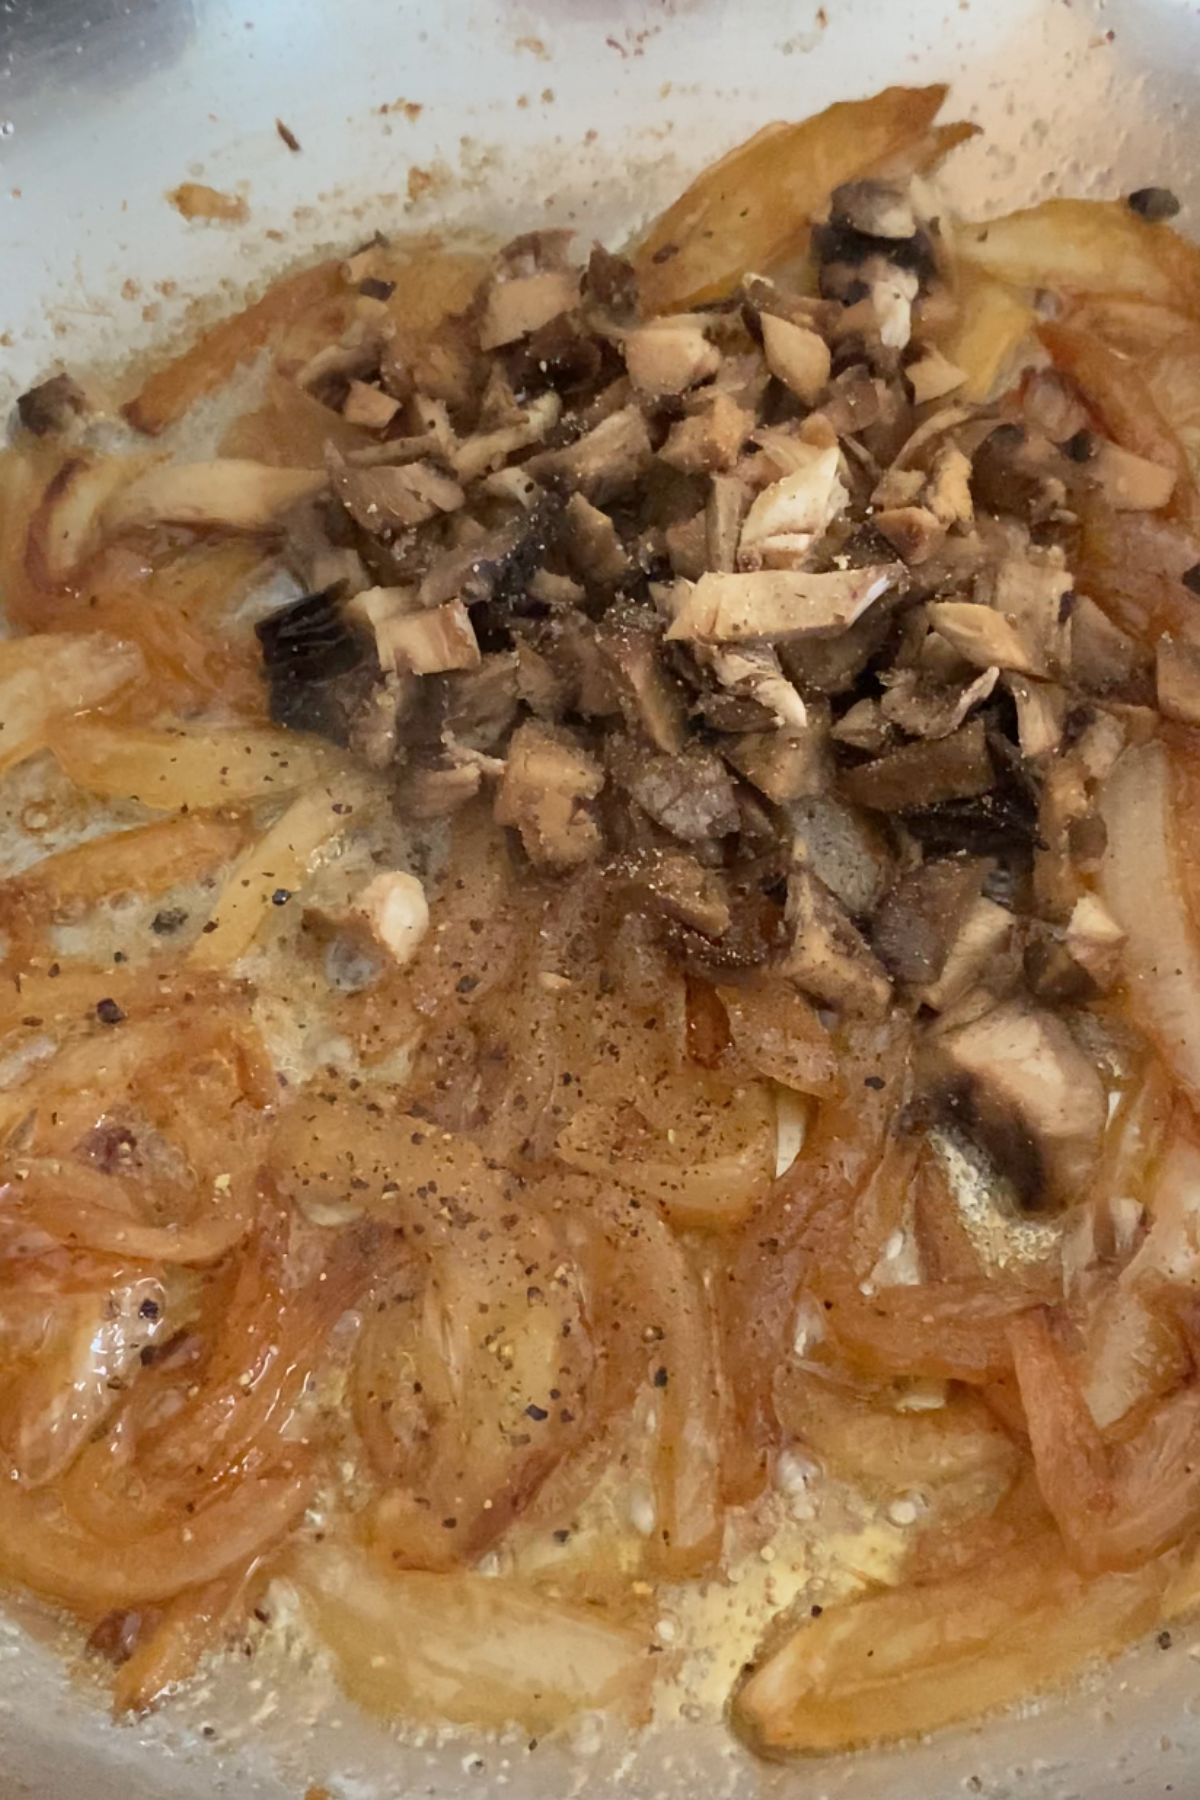 Adding mushrooms to the onion.